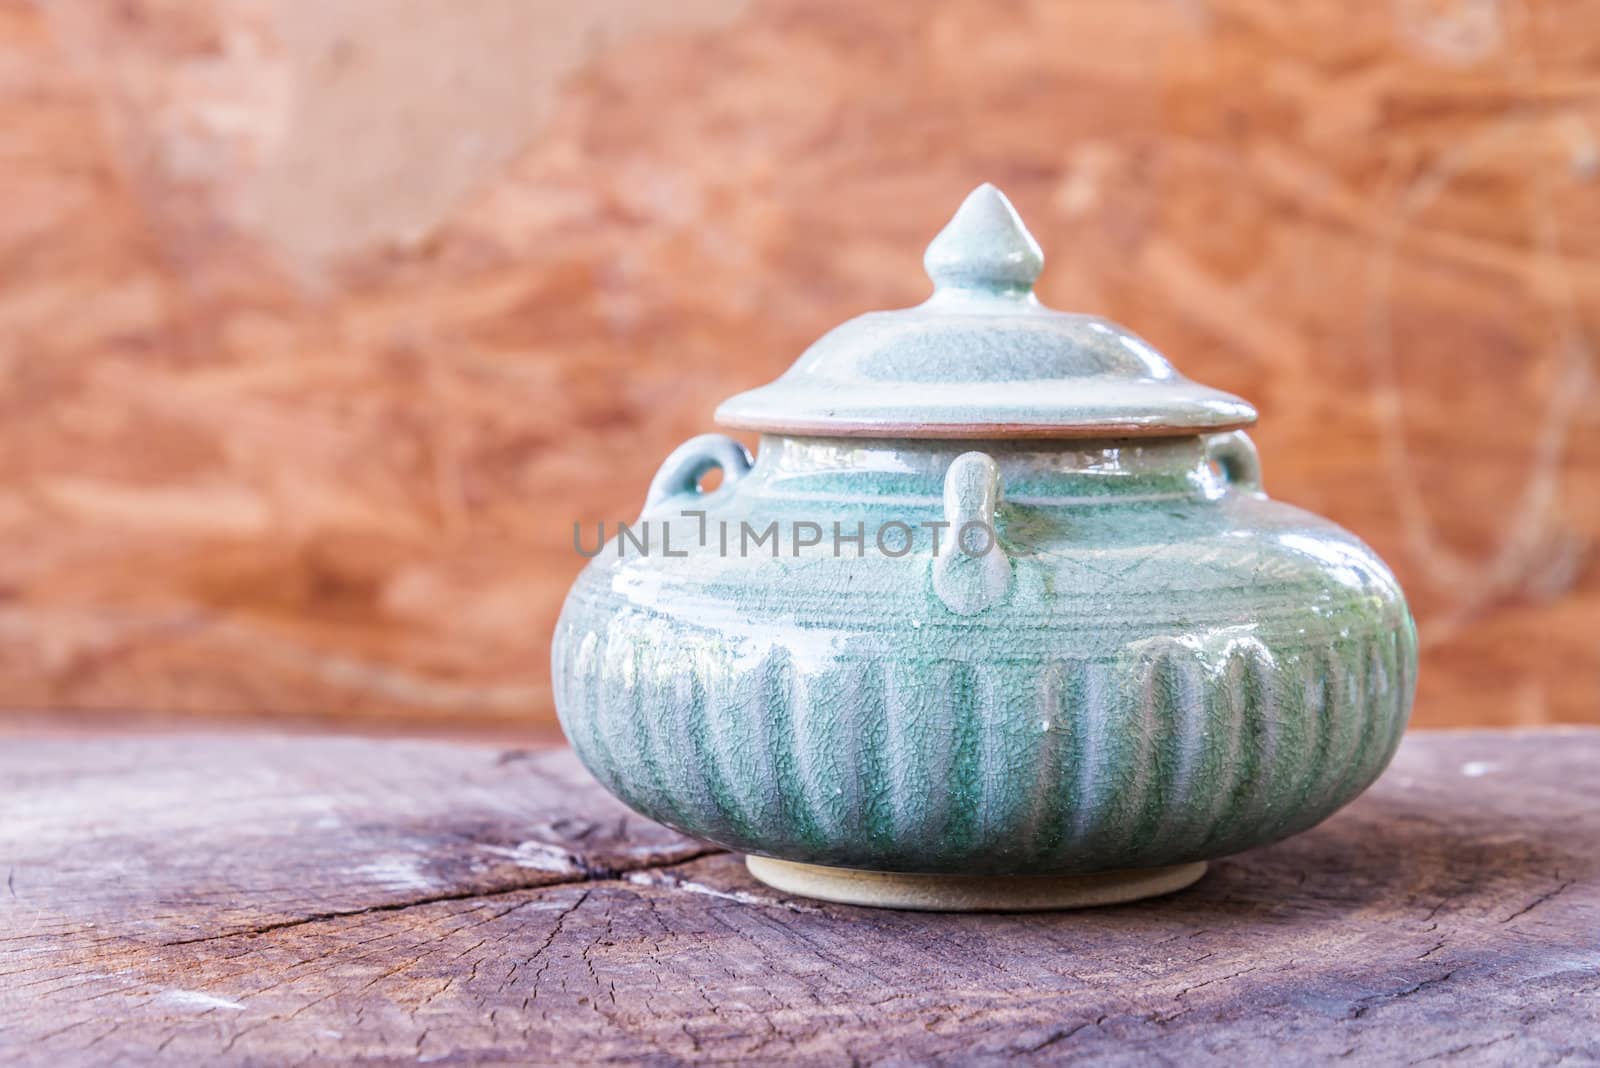 vintage ceramic pot on wood by wmitrmatr